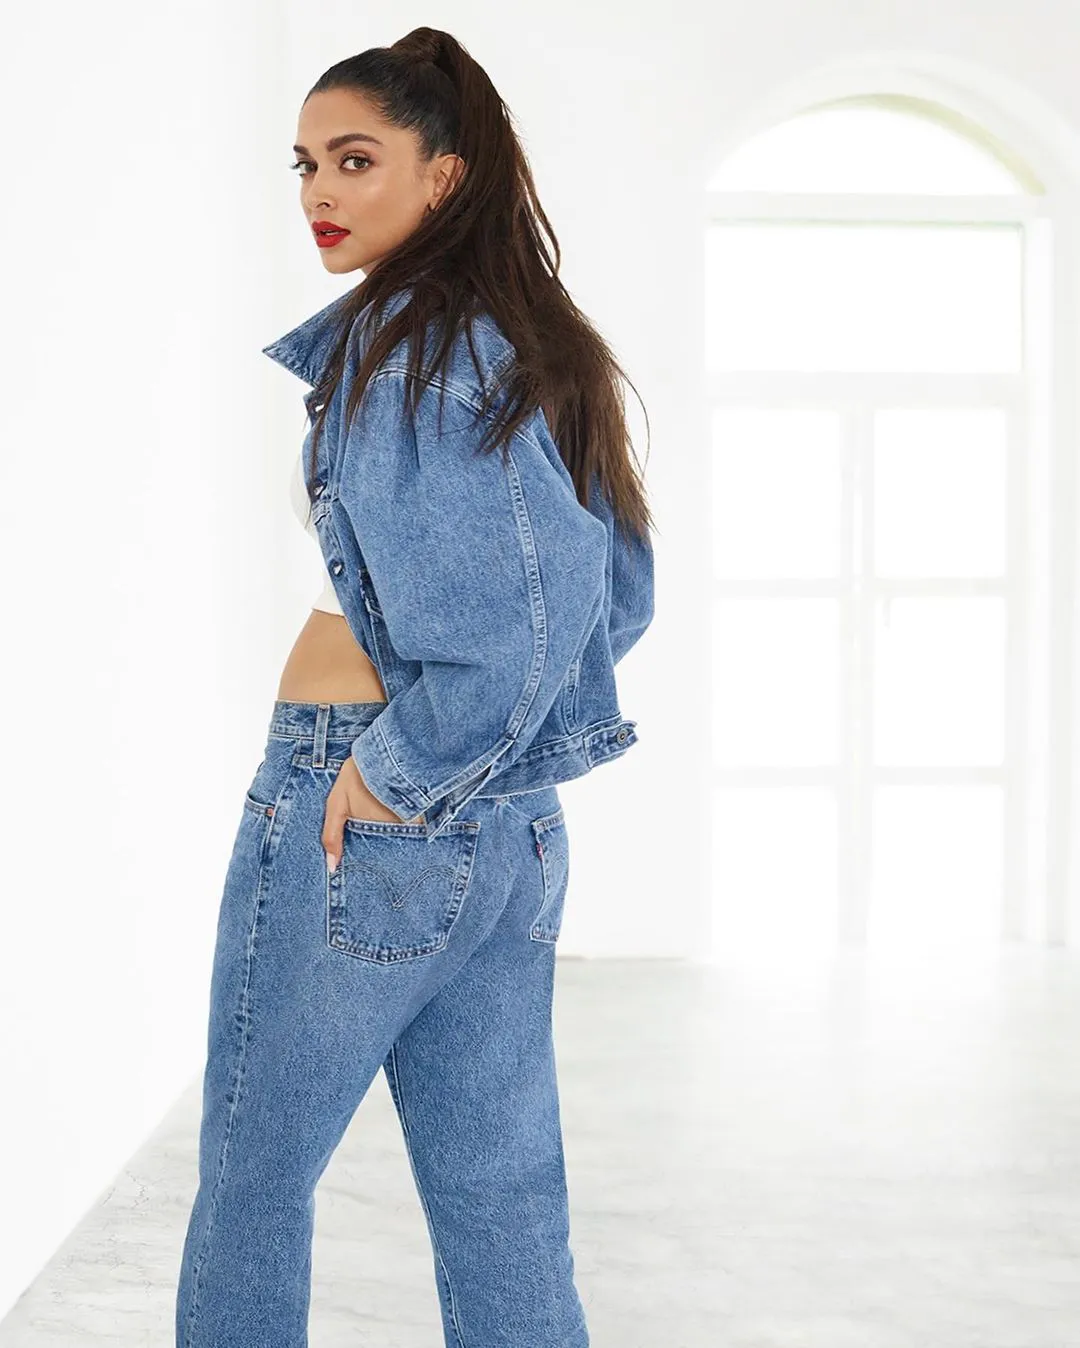 Deepika Padukone trendy looks in jeans